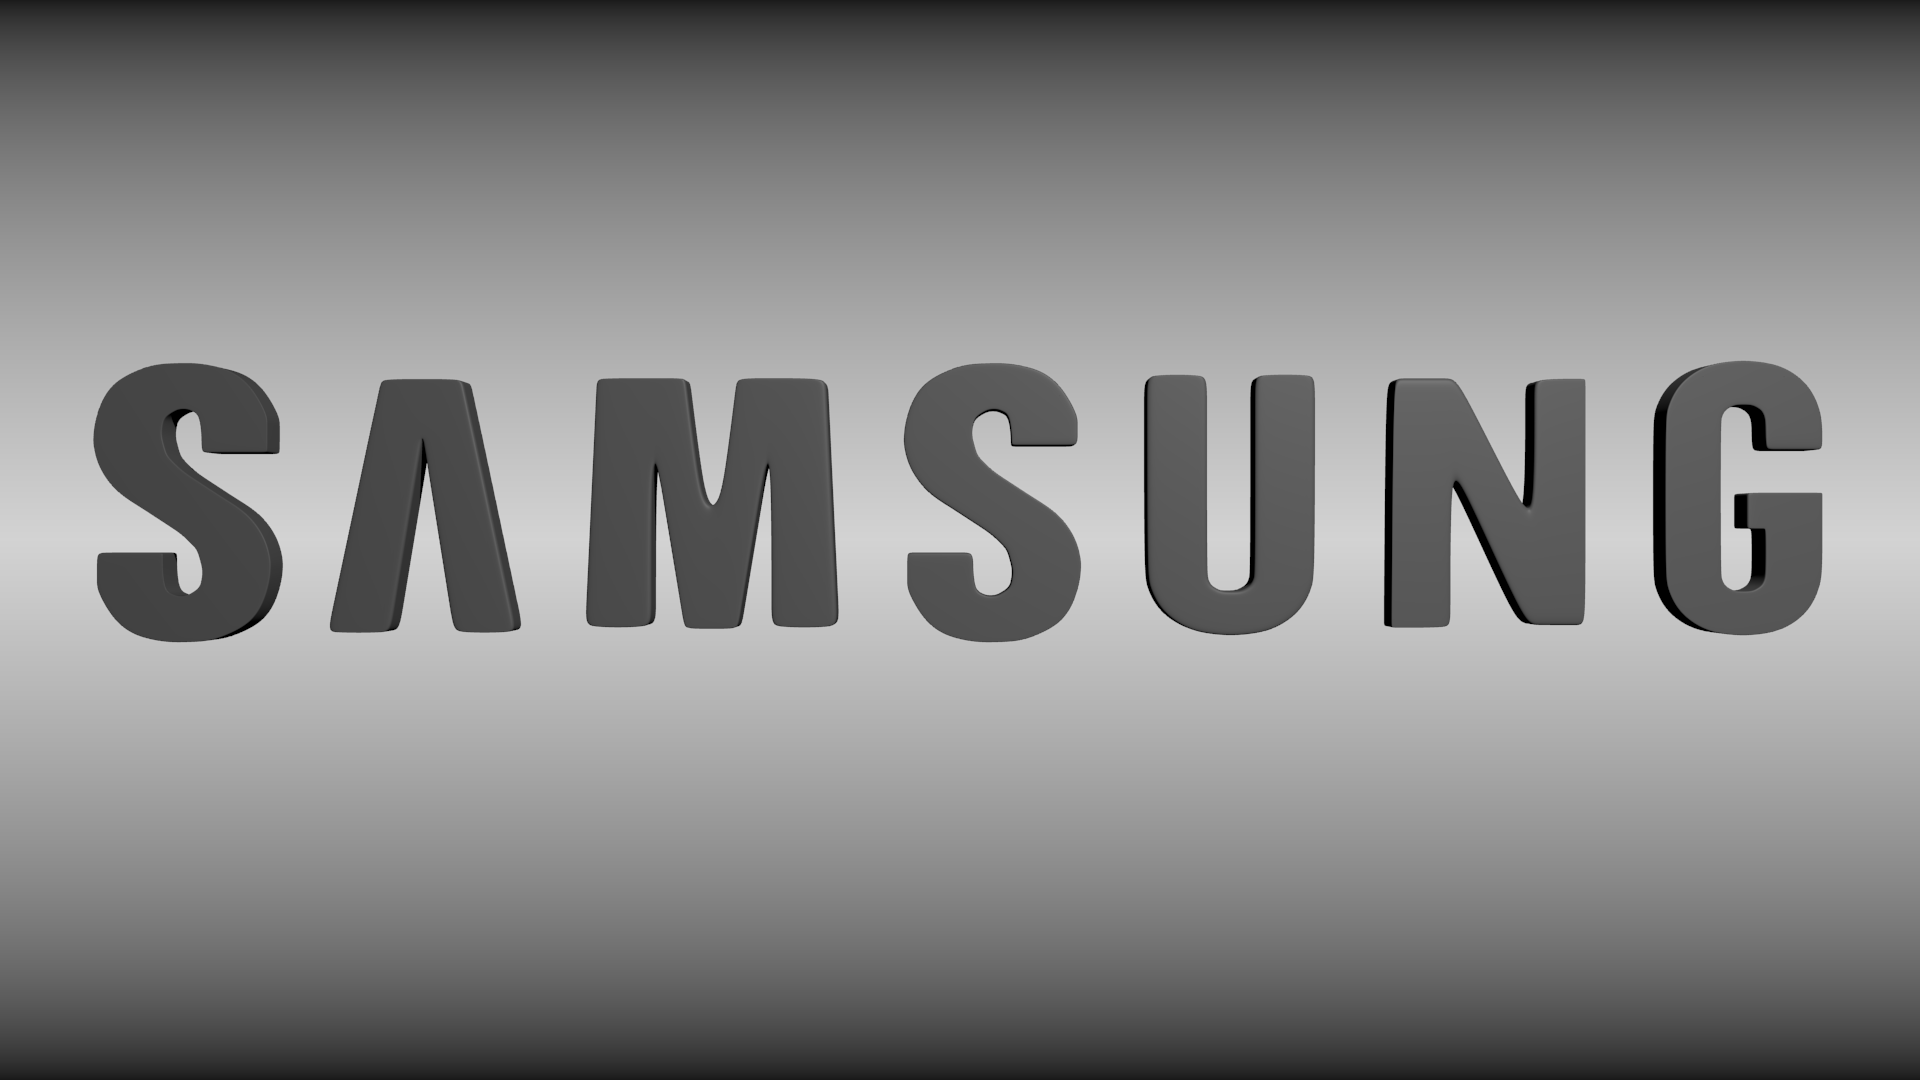 Samsung Silver Logo - Samsung Logo Wallpapers | Page 2 of 3 | wallpaper.wiki